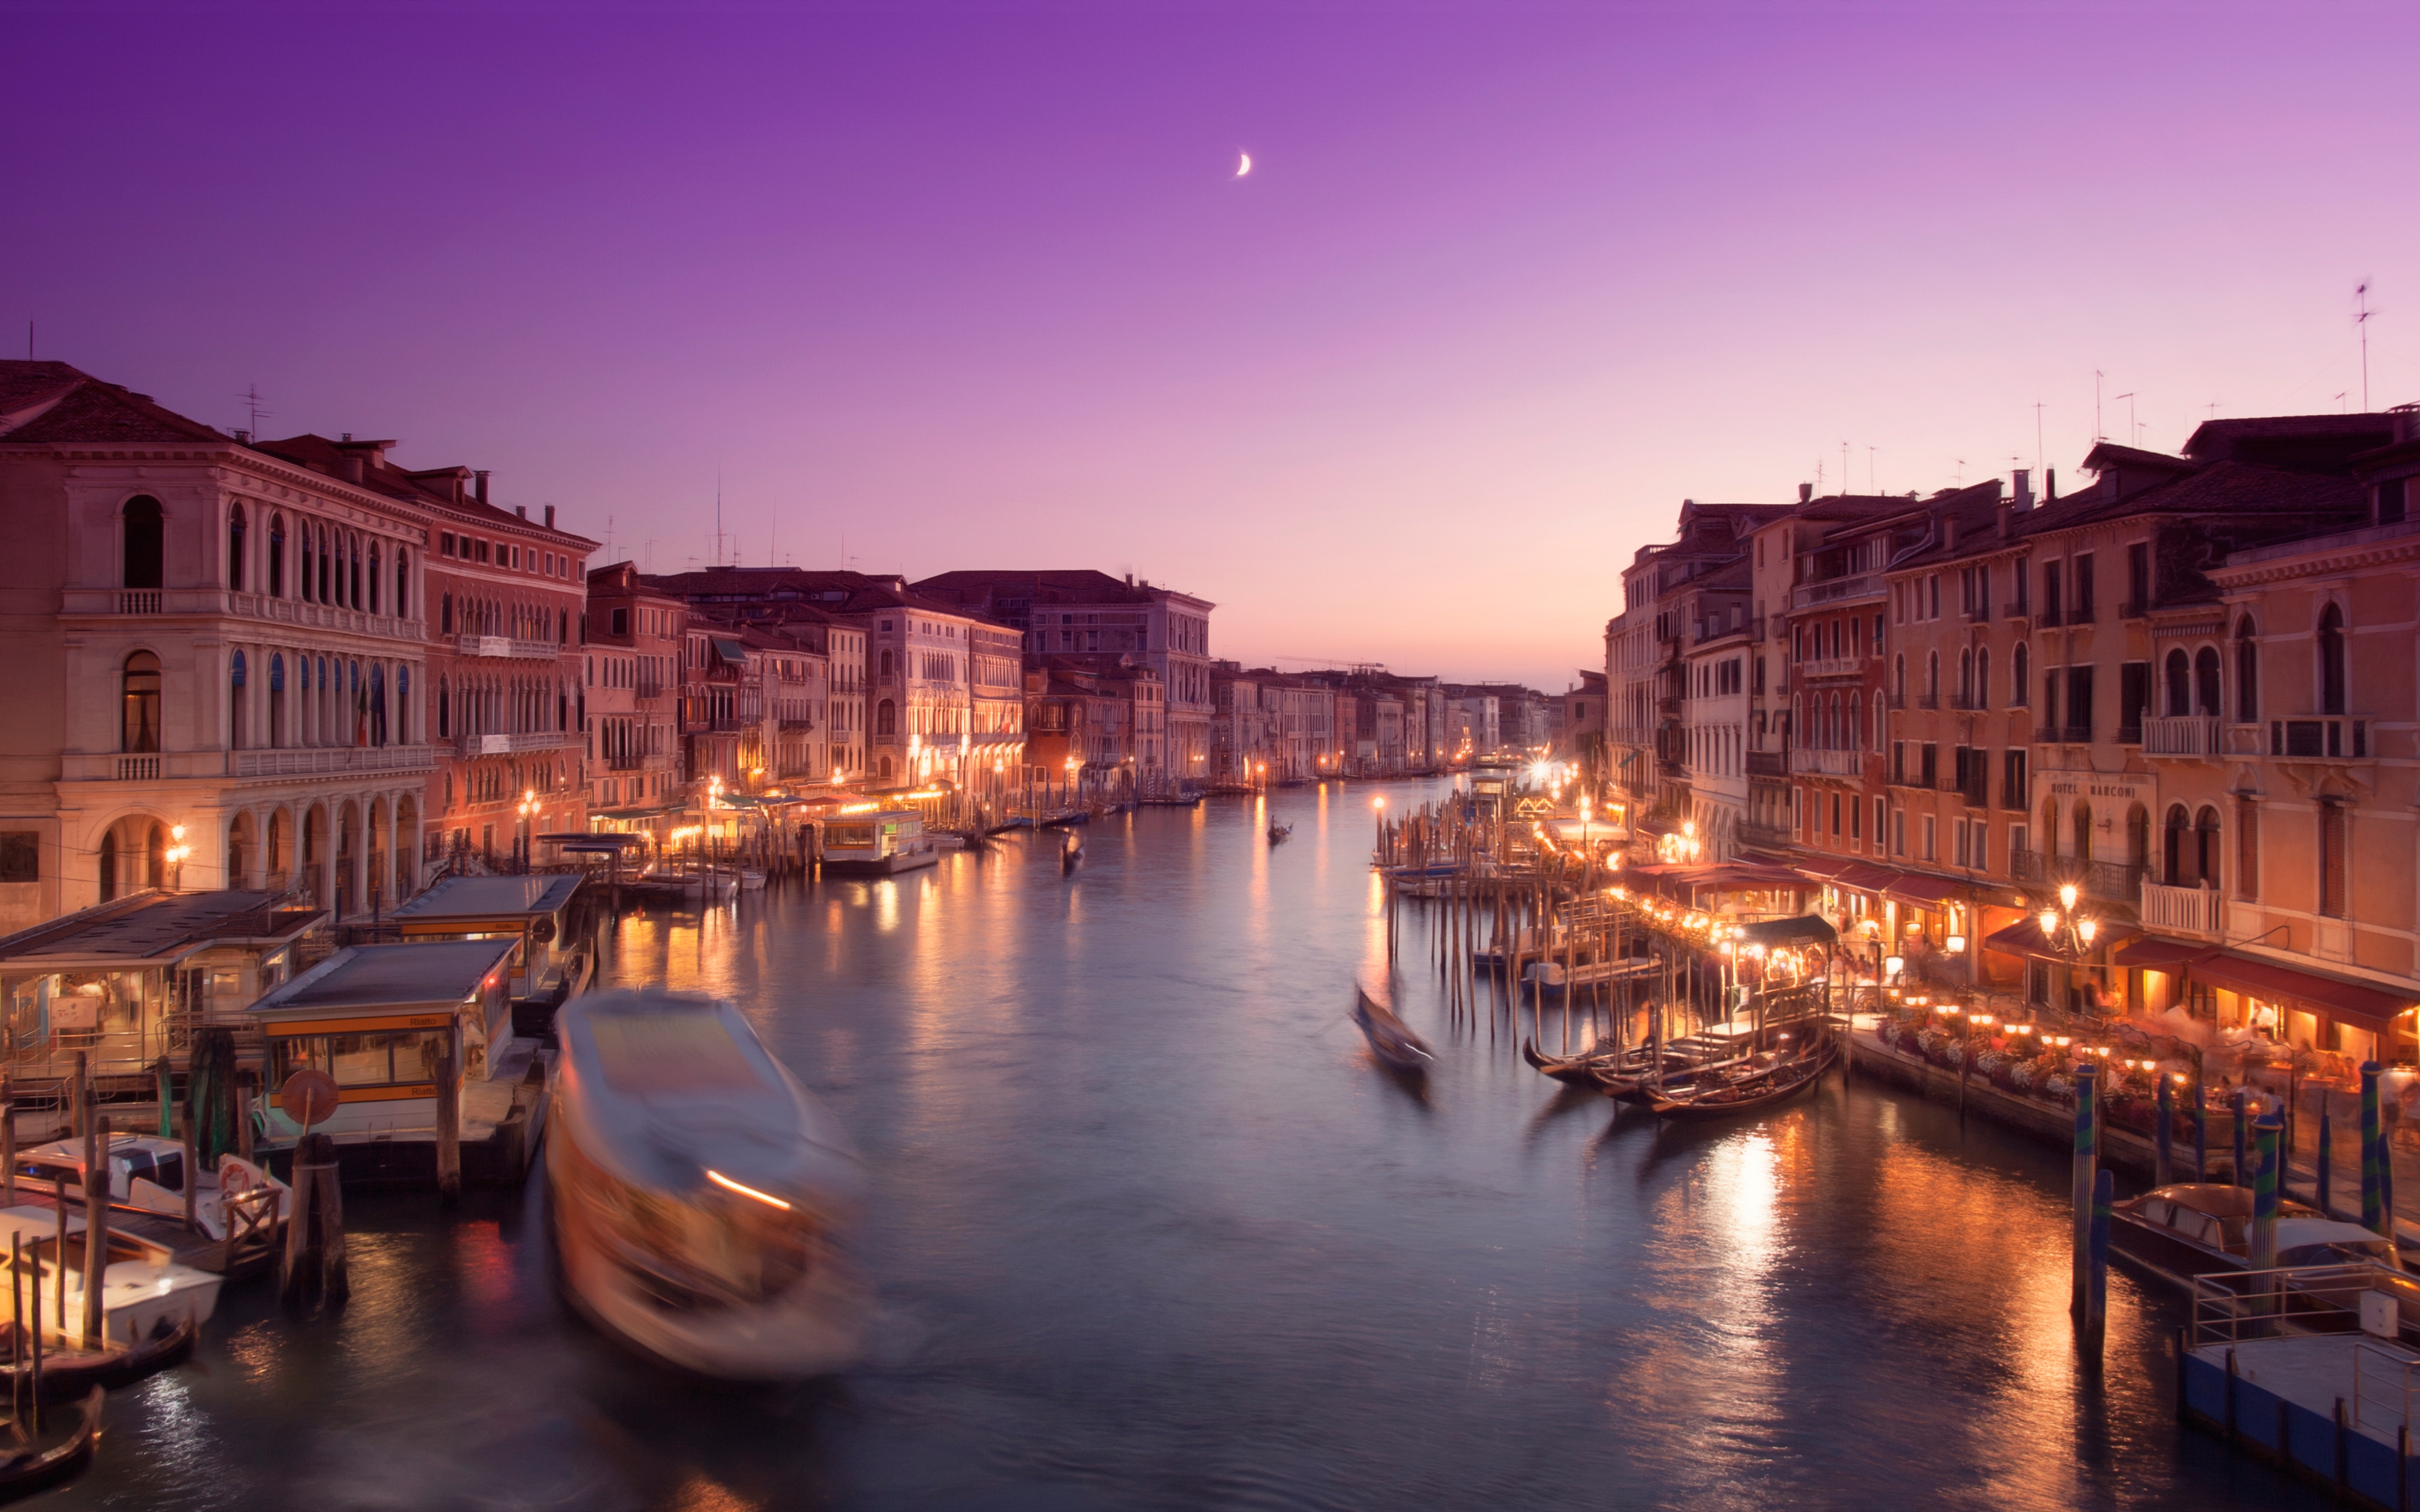 HD wallpaper, Venice City, Boats, Long Exposure, Moon, Cityscape, Purple Sky, Body Of Water, Sunset, City Lights